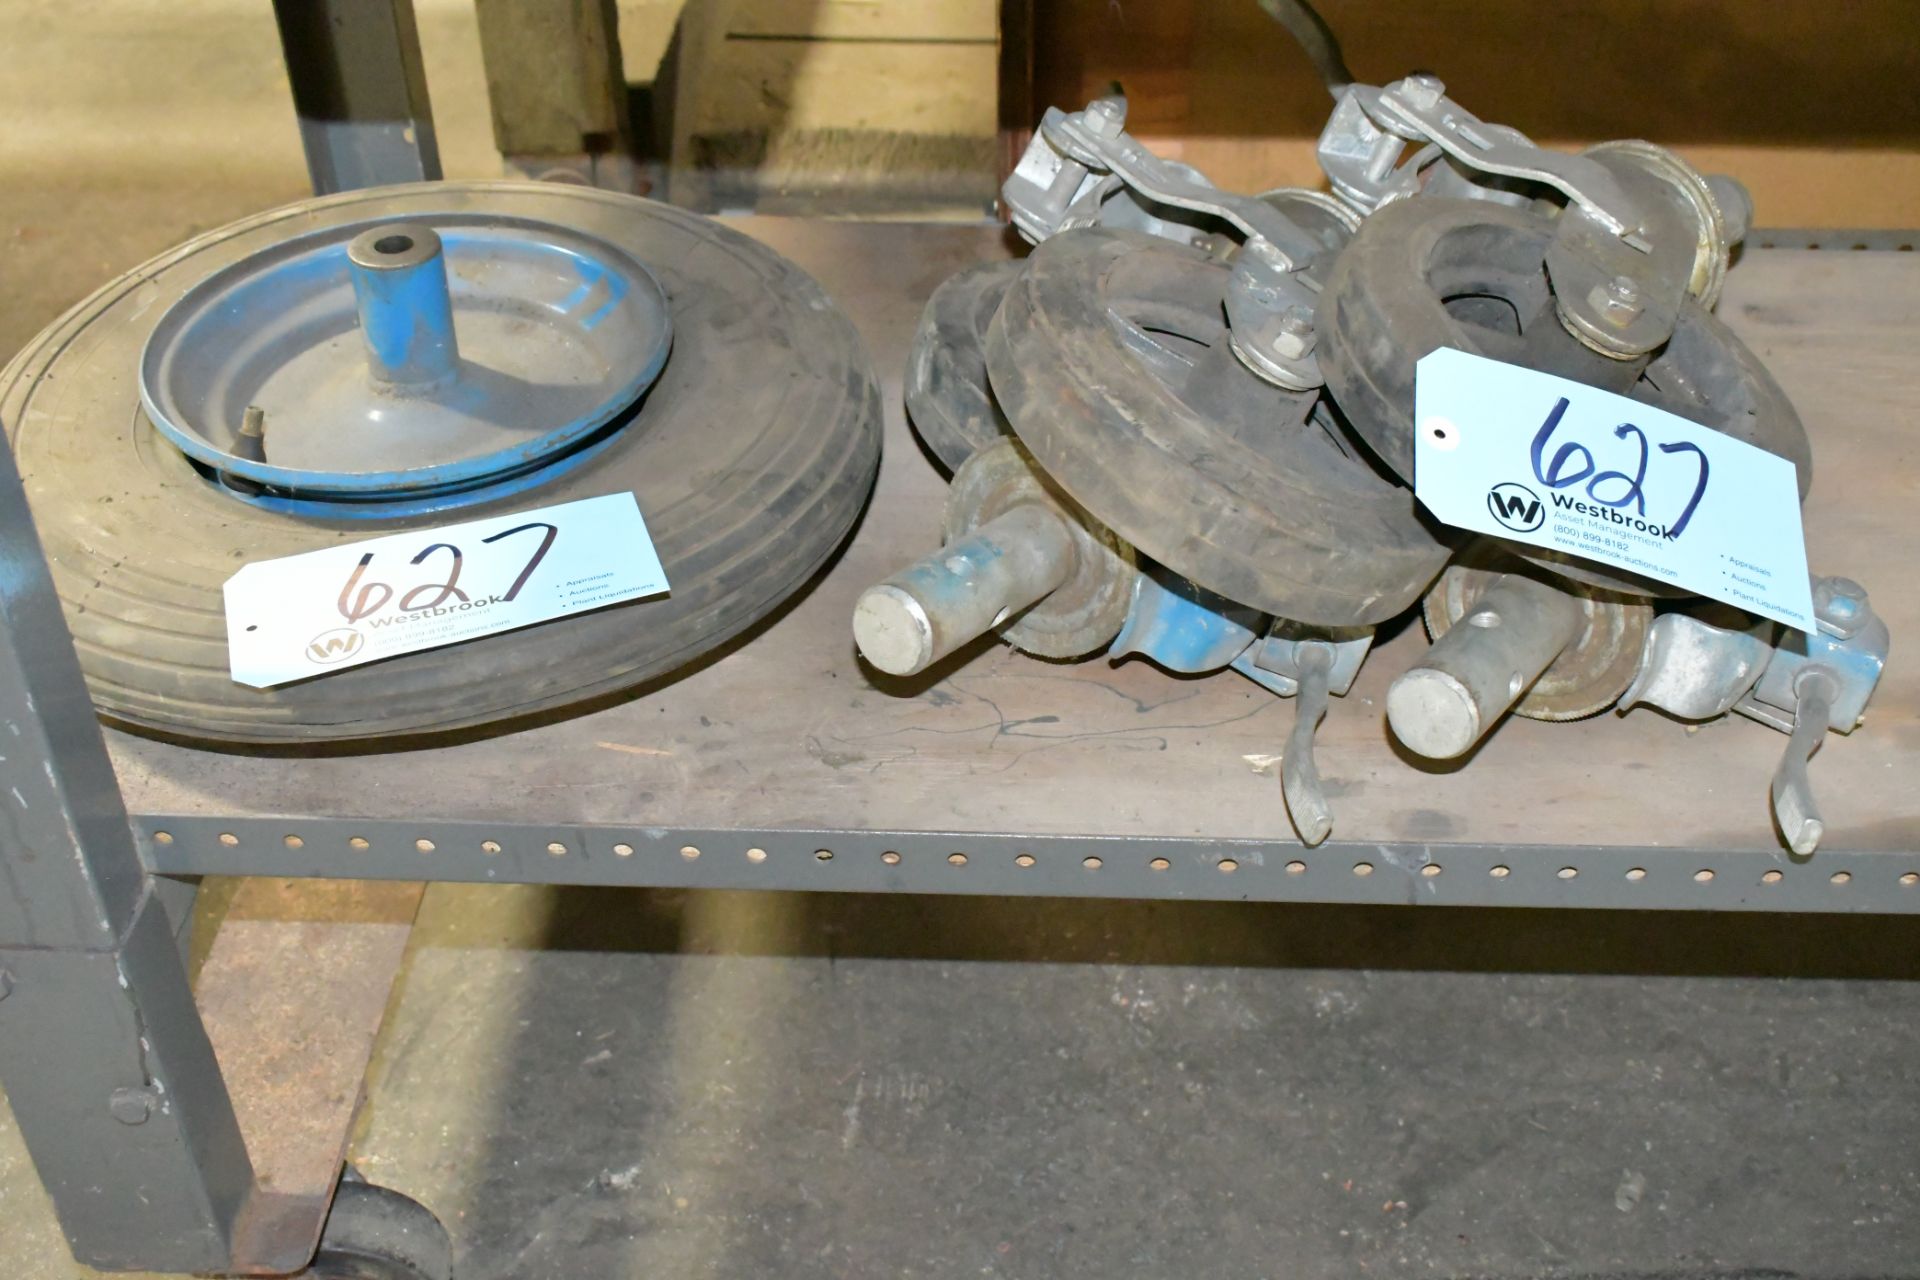 Lot-Scaffold Wheels and (1) Wheel Barrow Wheel on Shelf Under (1) Bench